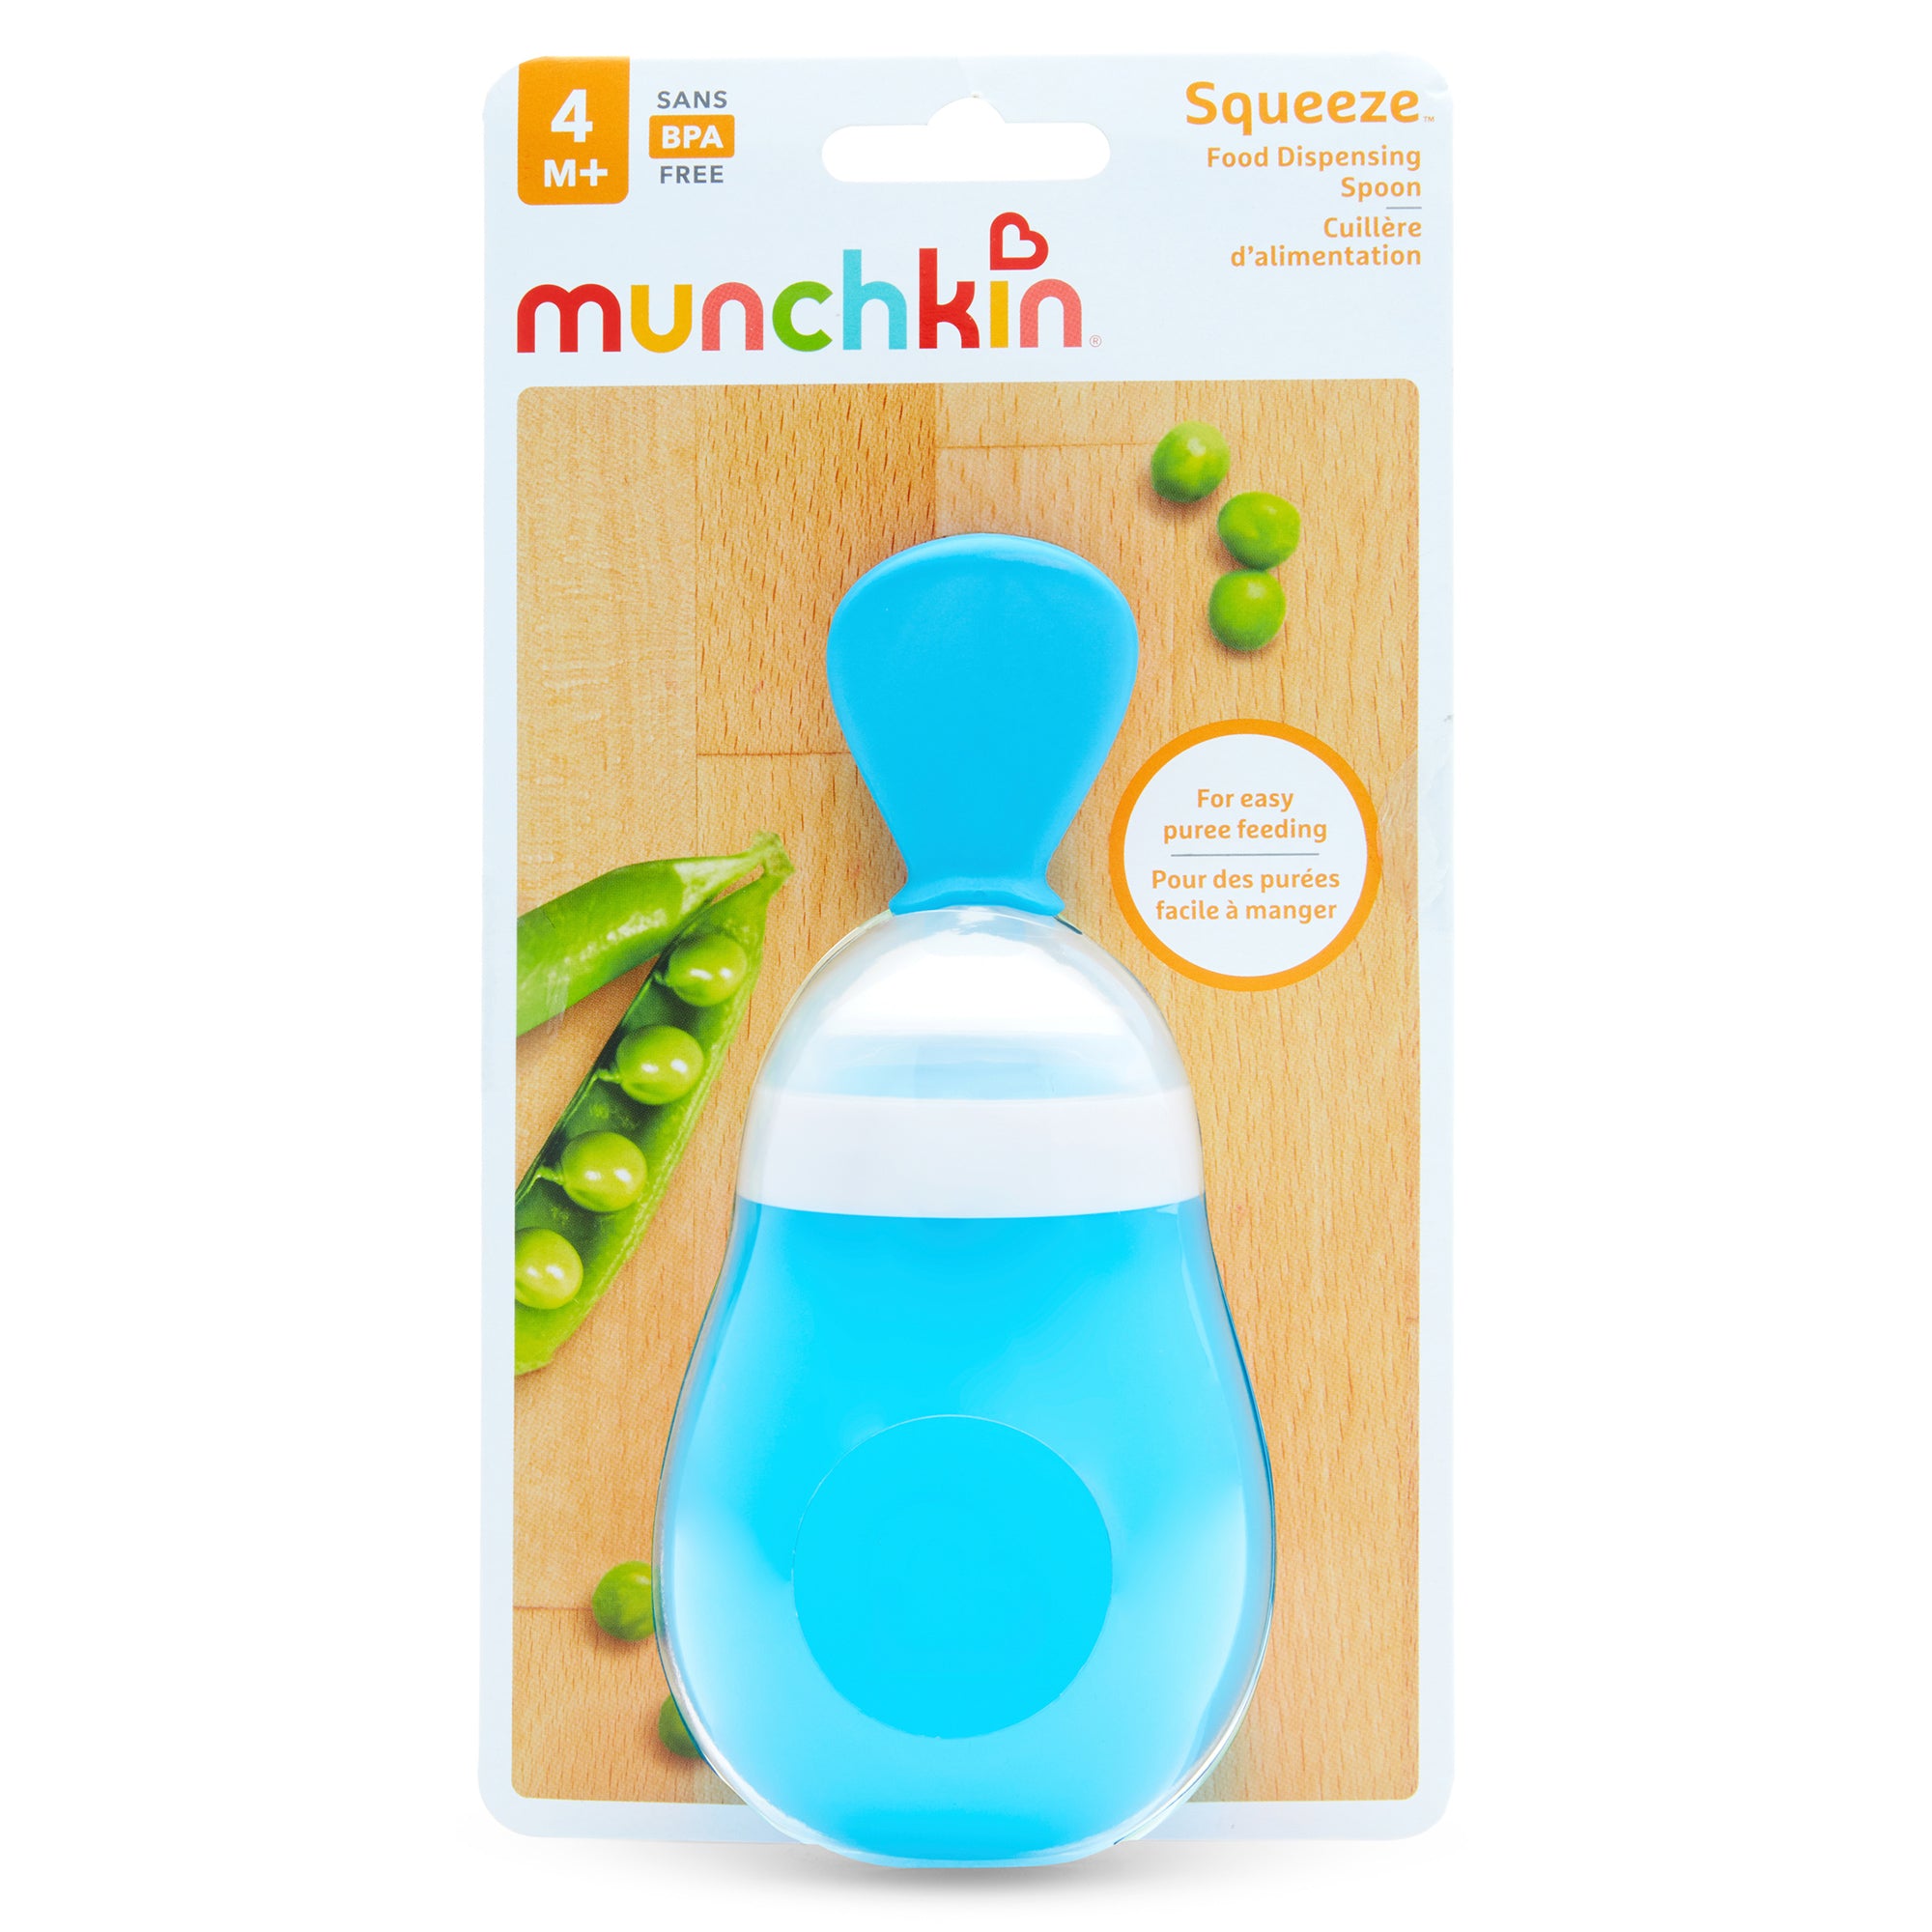 Munchkin Squeeze Food Dispensing Spoon